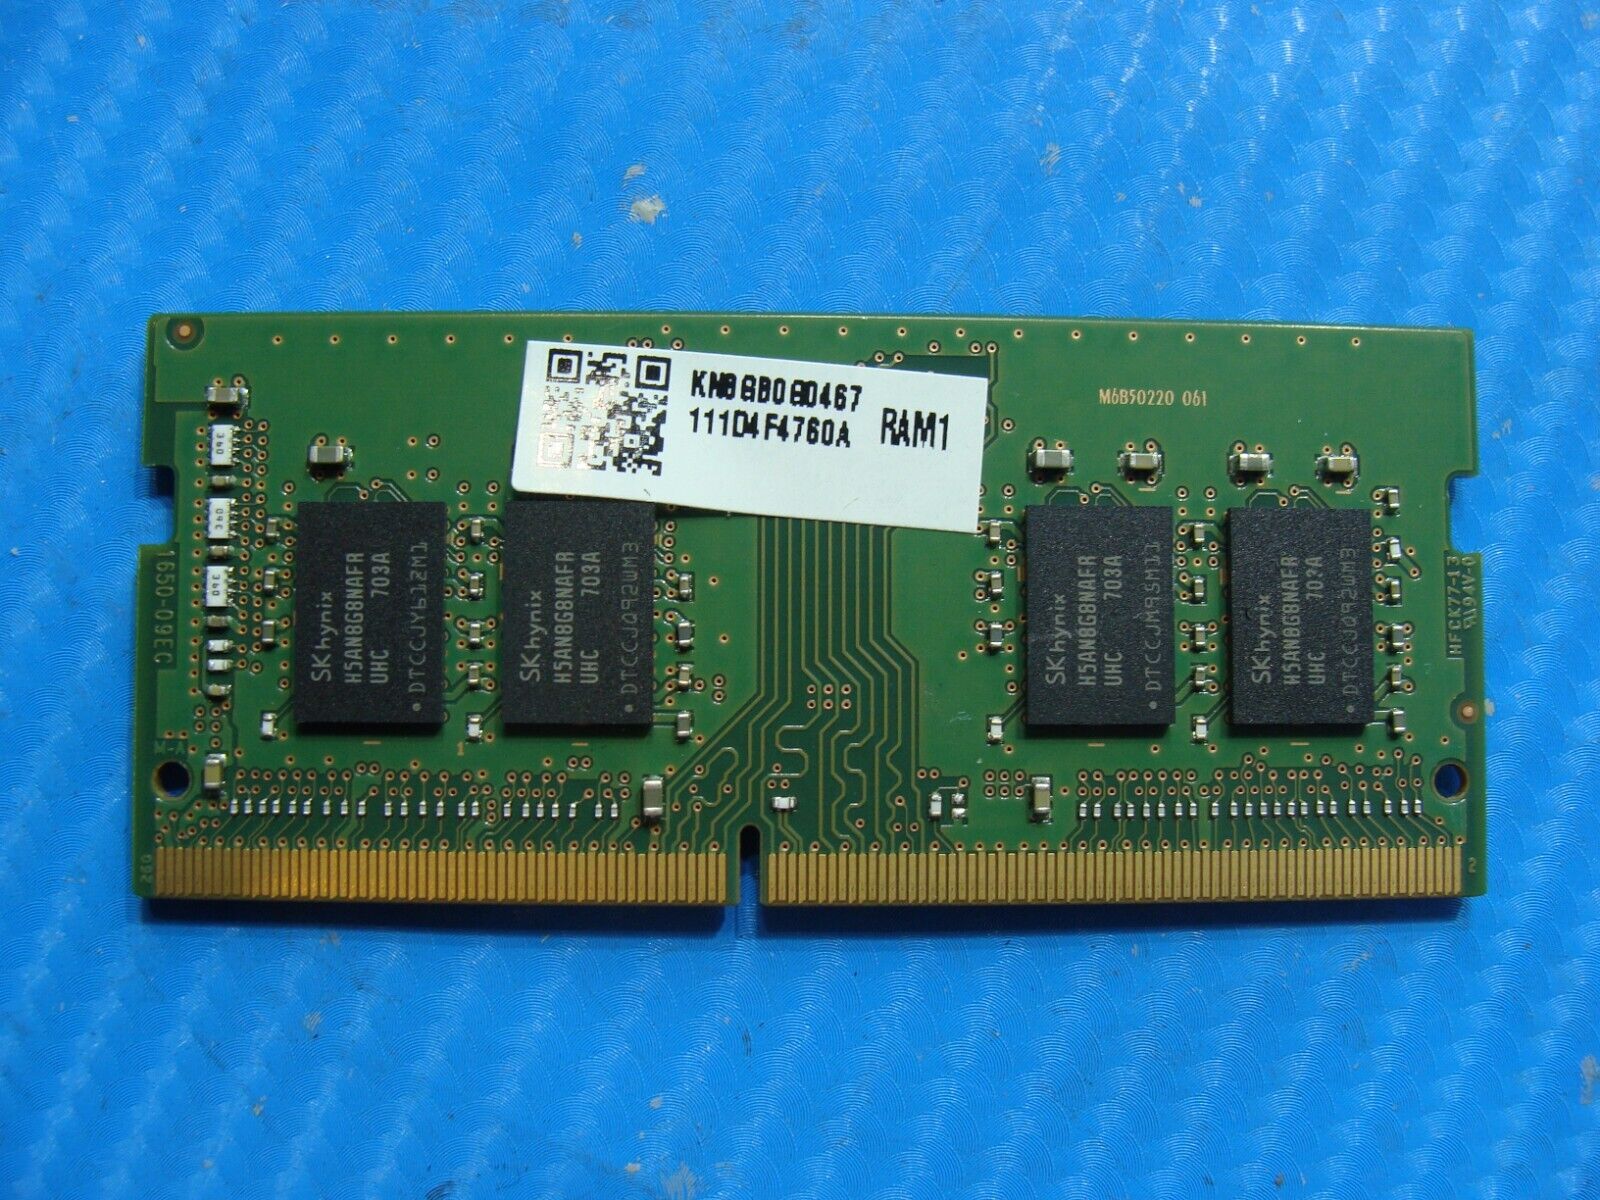 Acer E5-575G SK Hynix 8GB 1Rx8 PC4-2400T Memory RAM SO-DIMM HMA81GS6AFR8N-UH